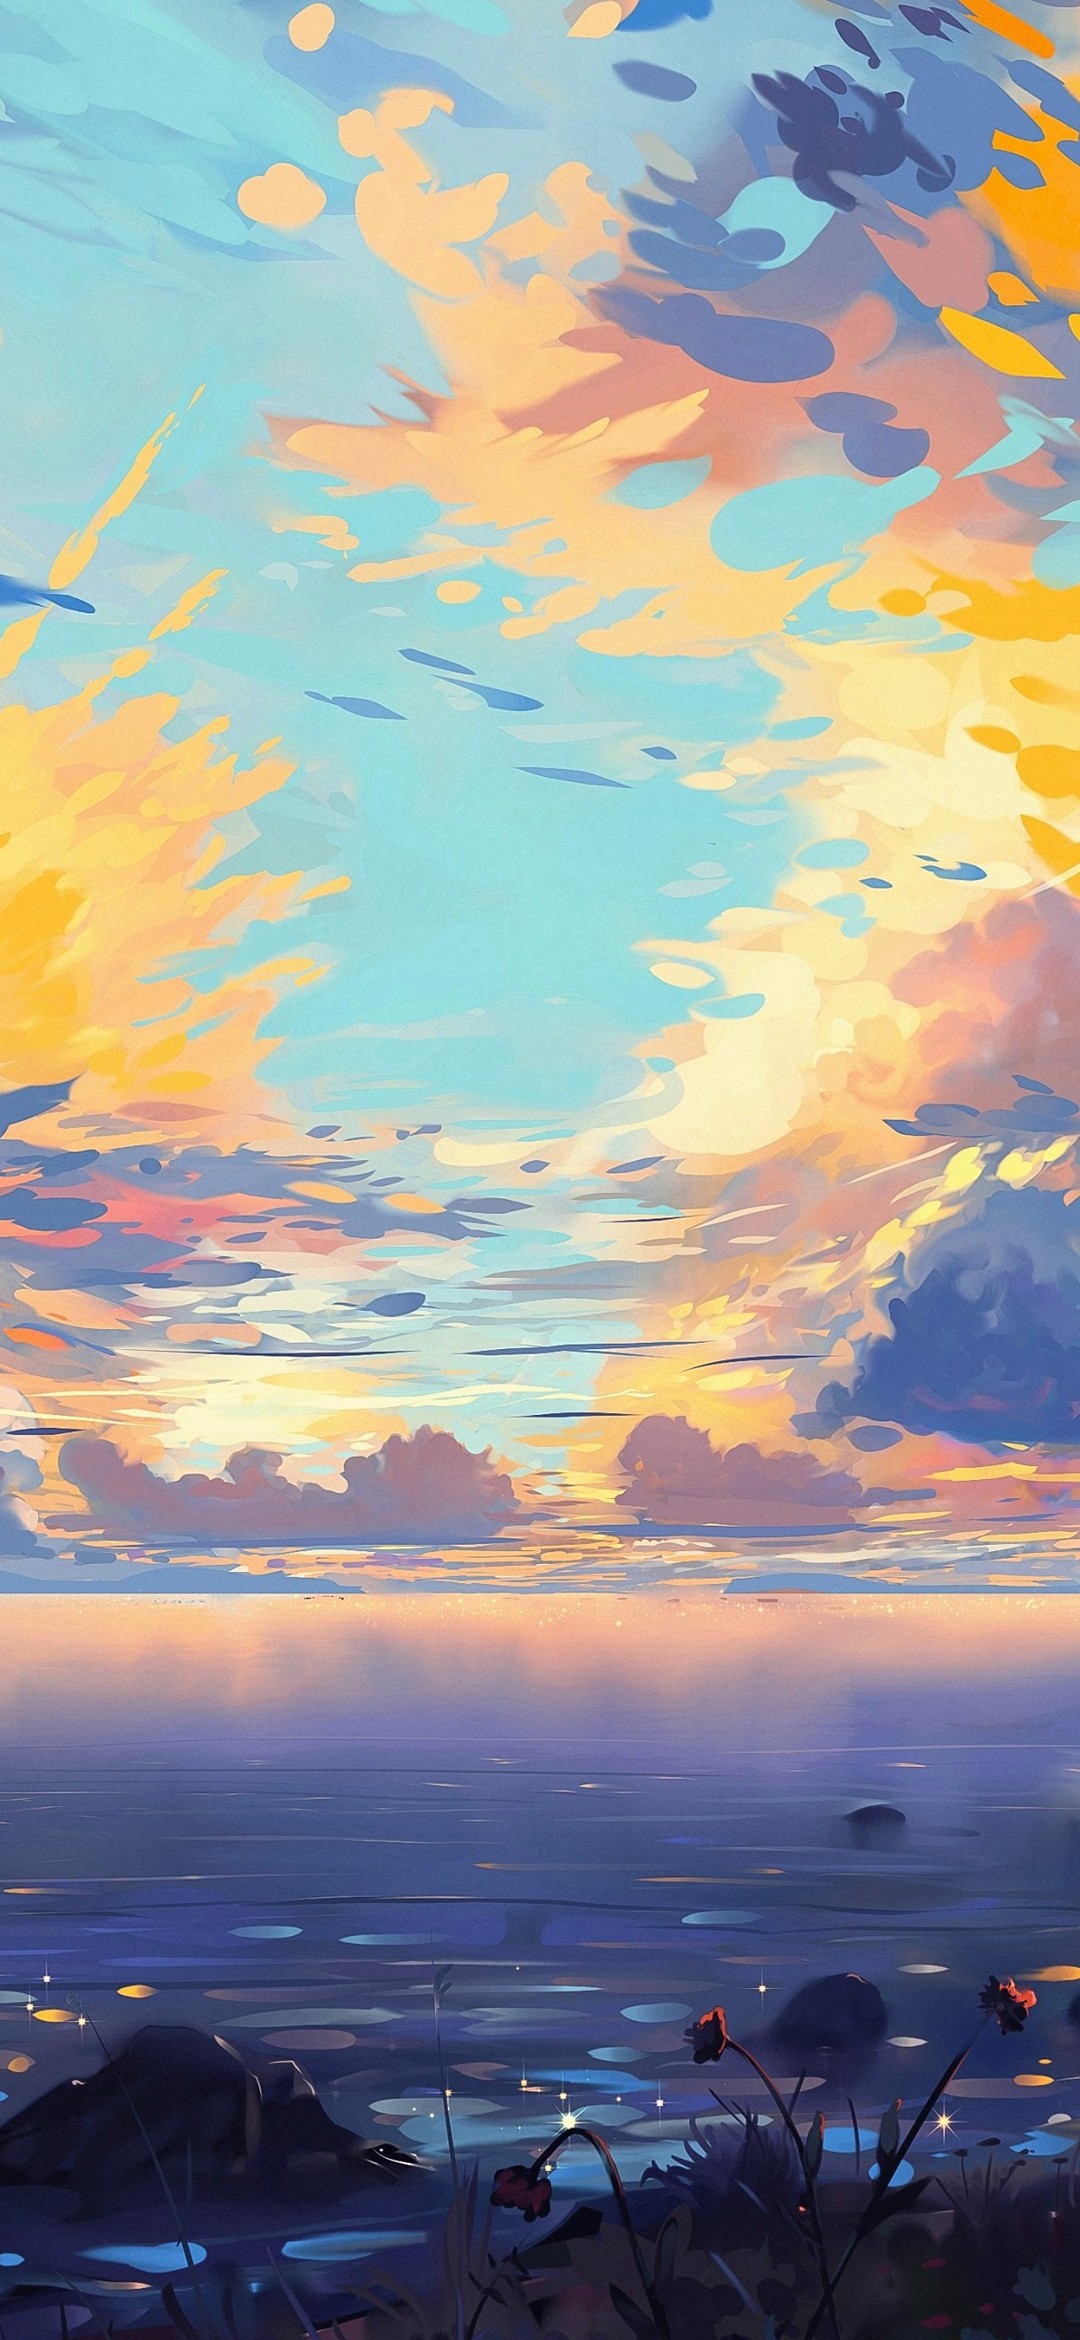 Light Blue And Yellow Sky Lake Illustration Rog Phone 3 Android 壁紙 待ち受け スマラン